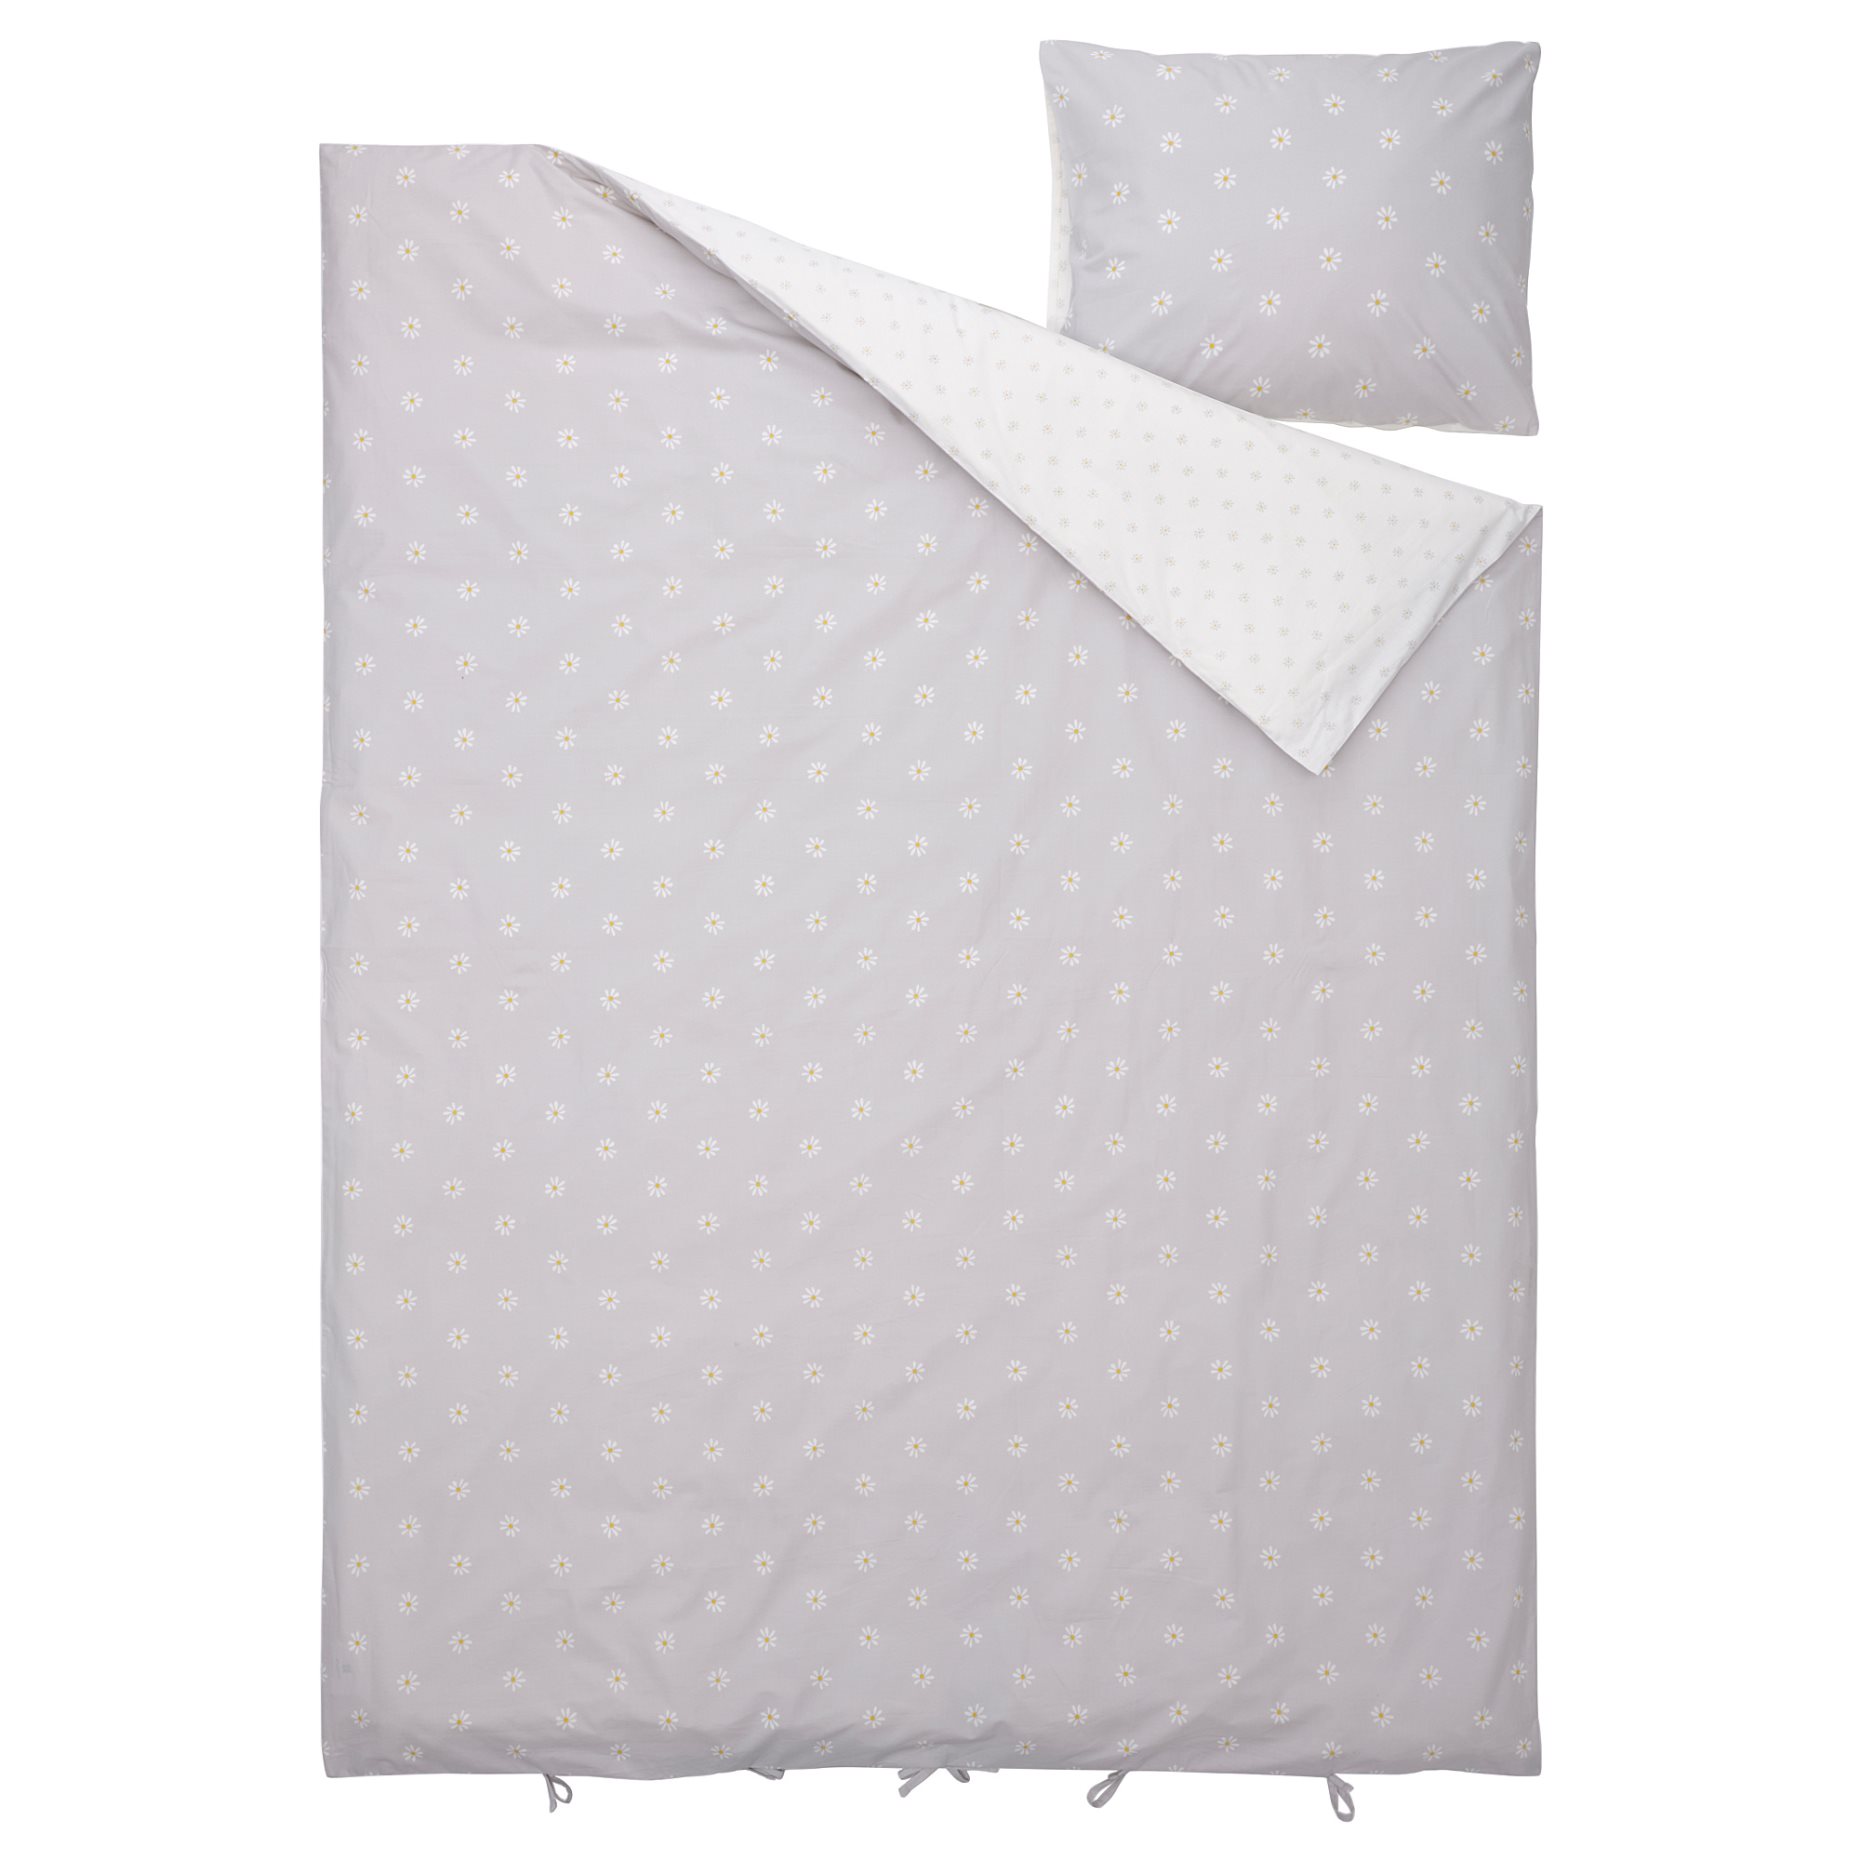 NATTSLÄNDA, duvet cover and pillowcase/floral pattern, 150x200/50x60 cm, 305.080.21